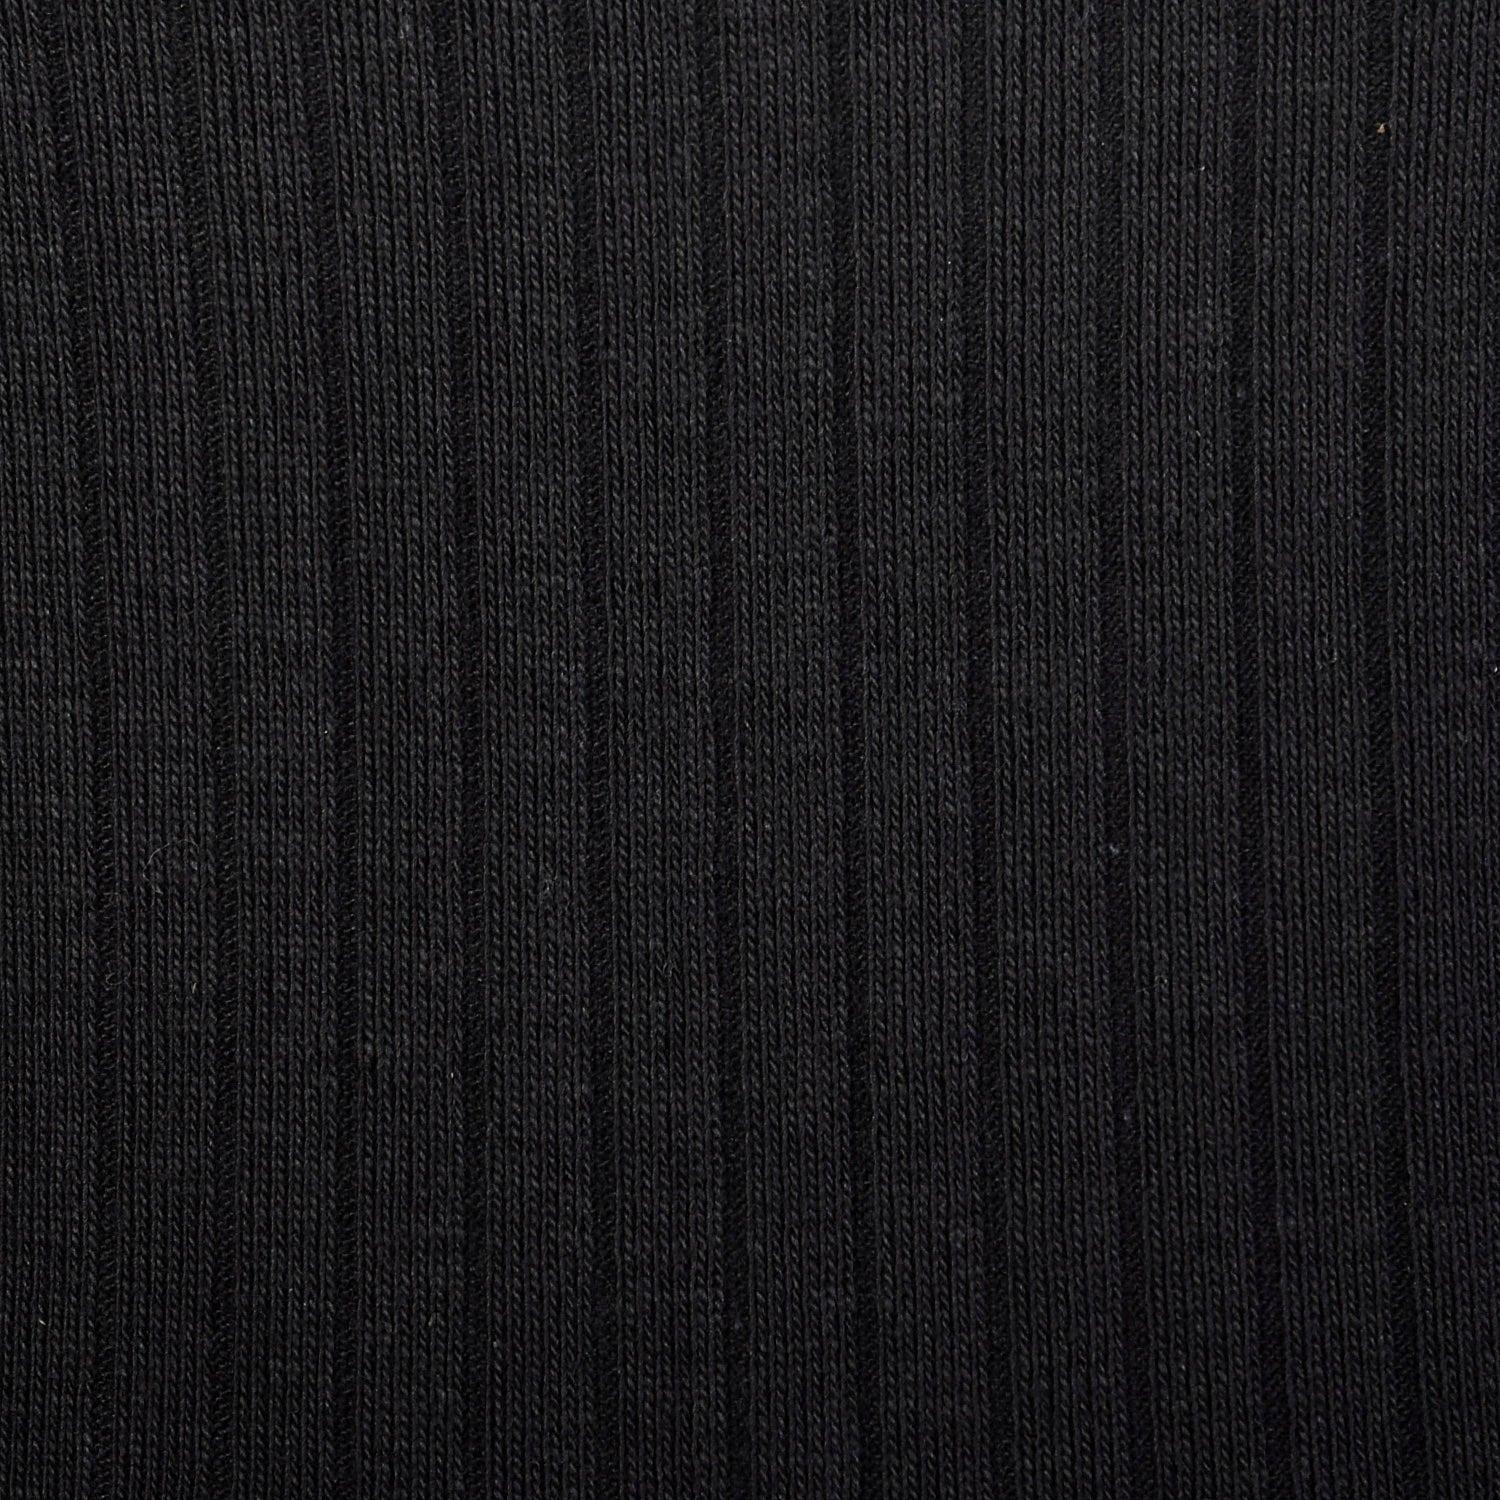 XXS 1960s Deadstock Black Ribbed Lightweight Long Sleeve Mock Turtleneck Shirt